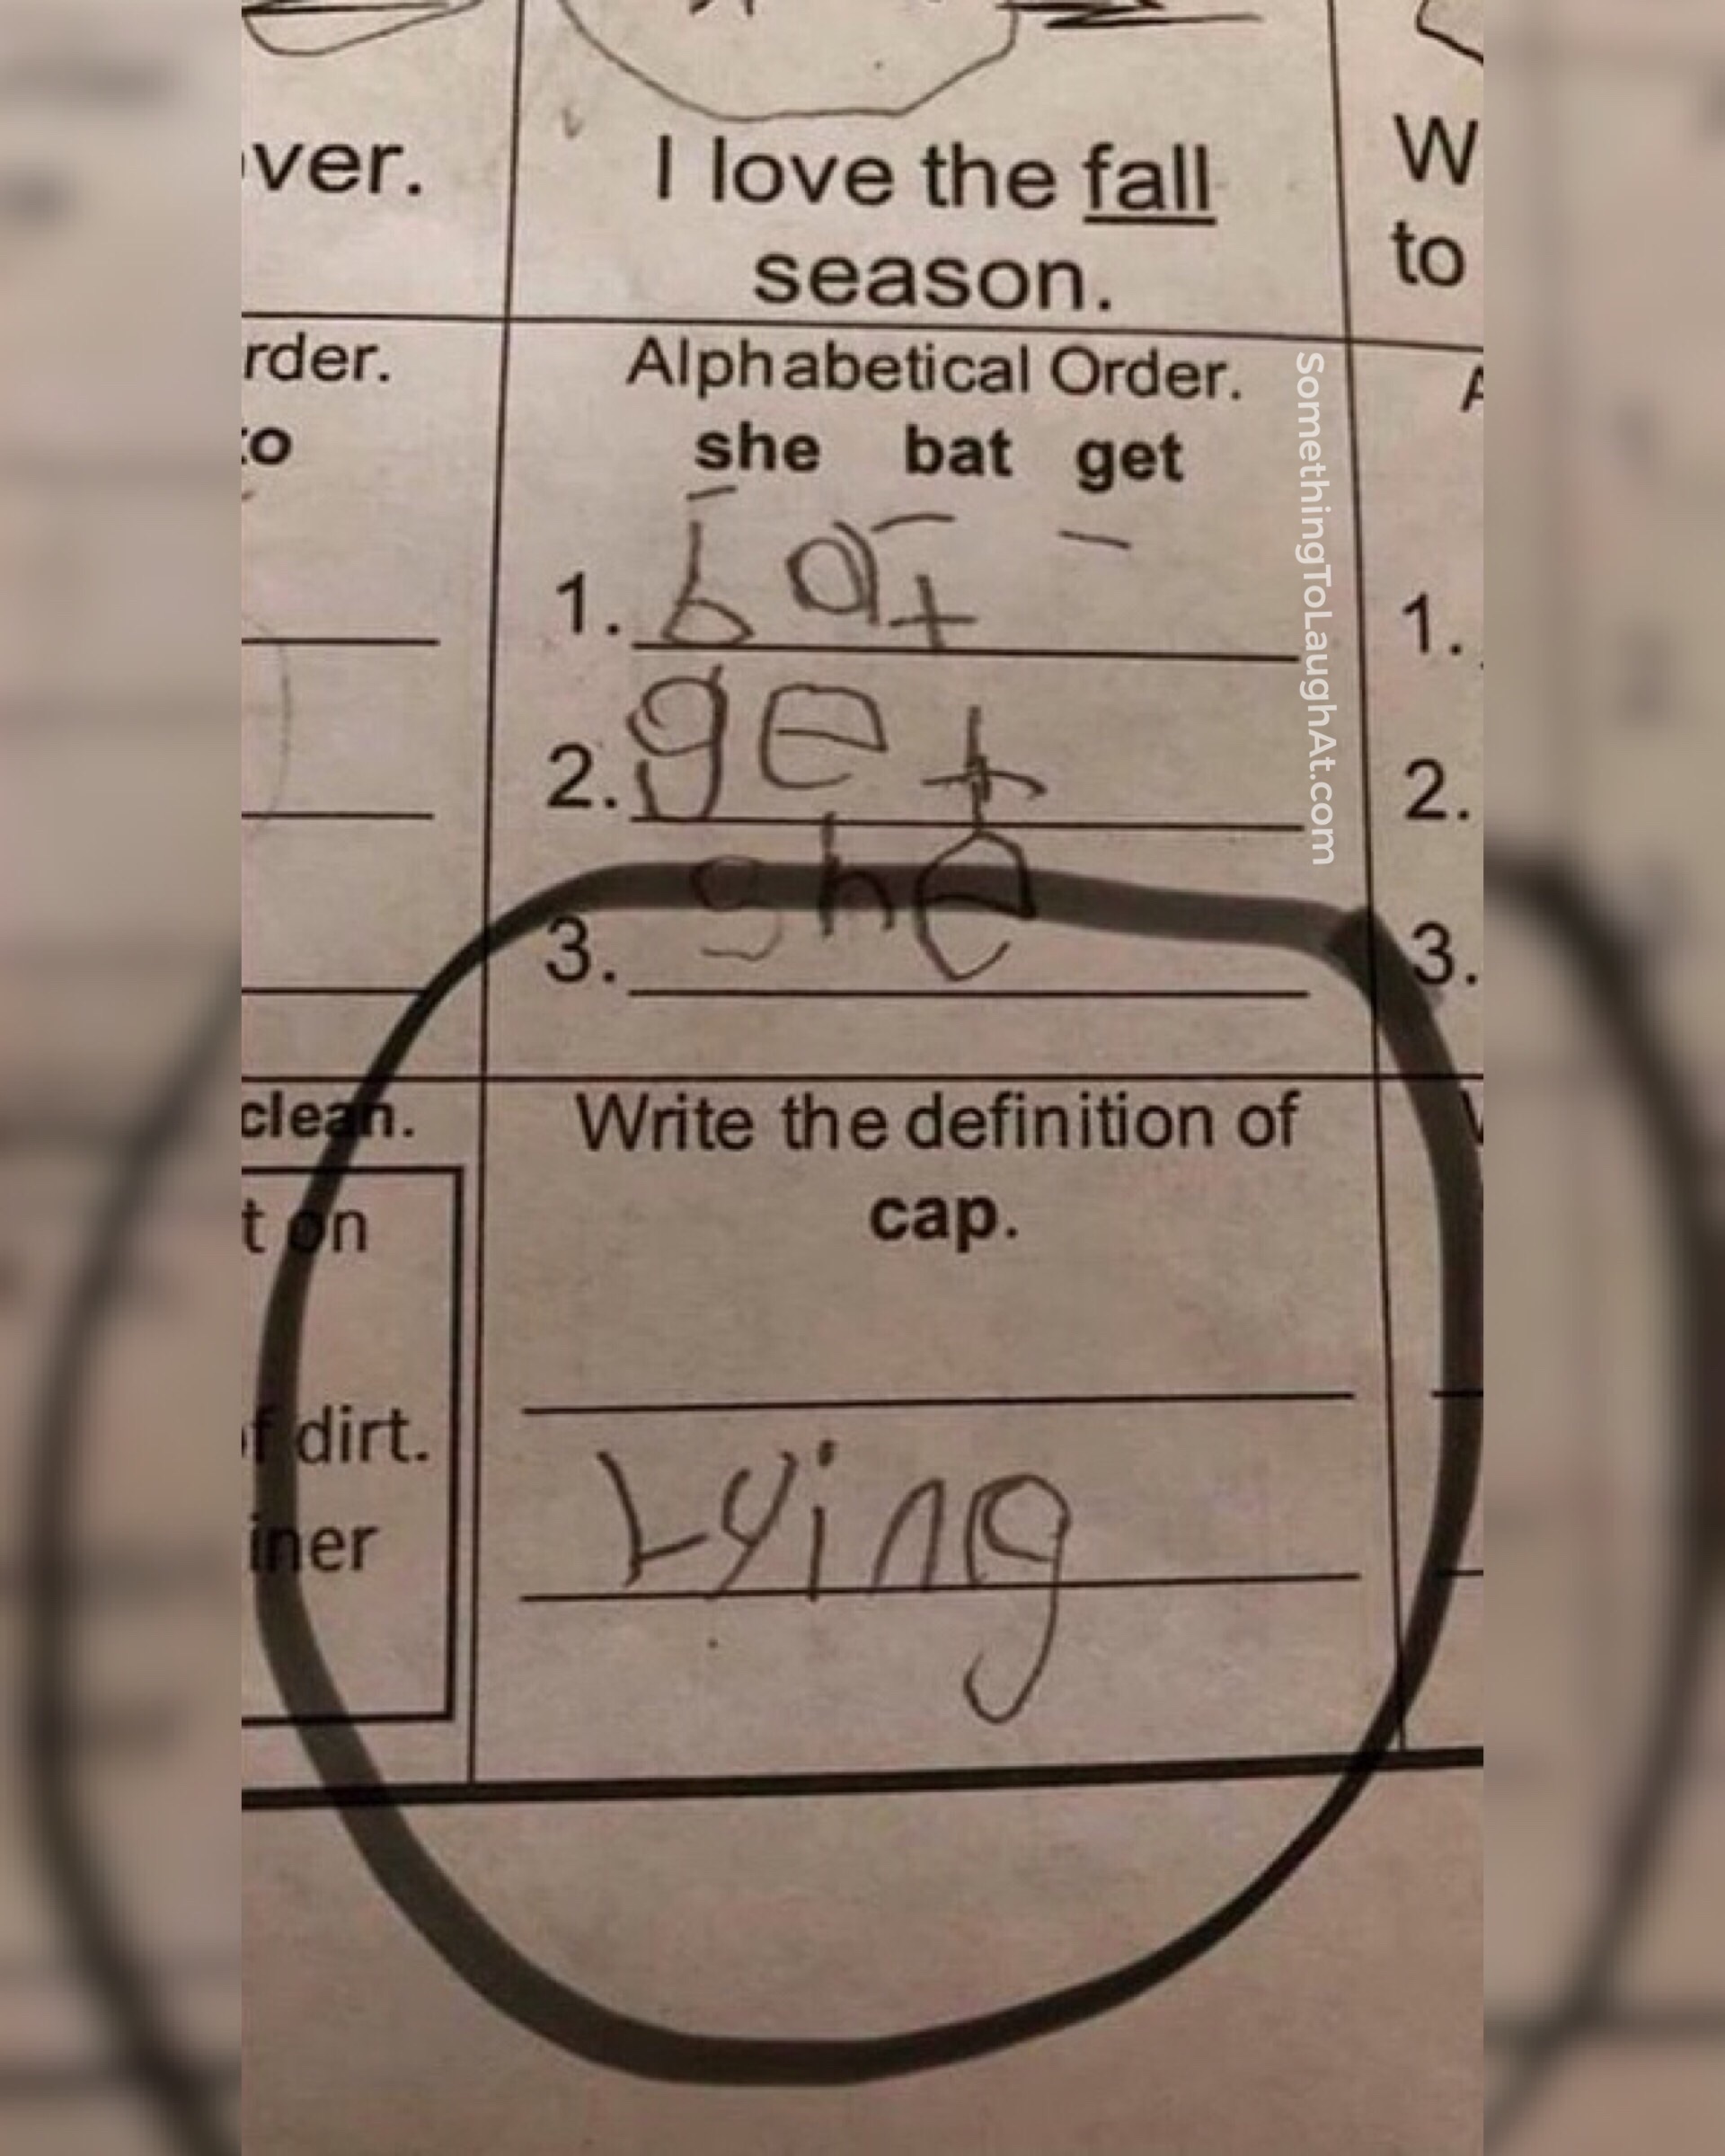 Elementary school kid funny answer to homework